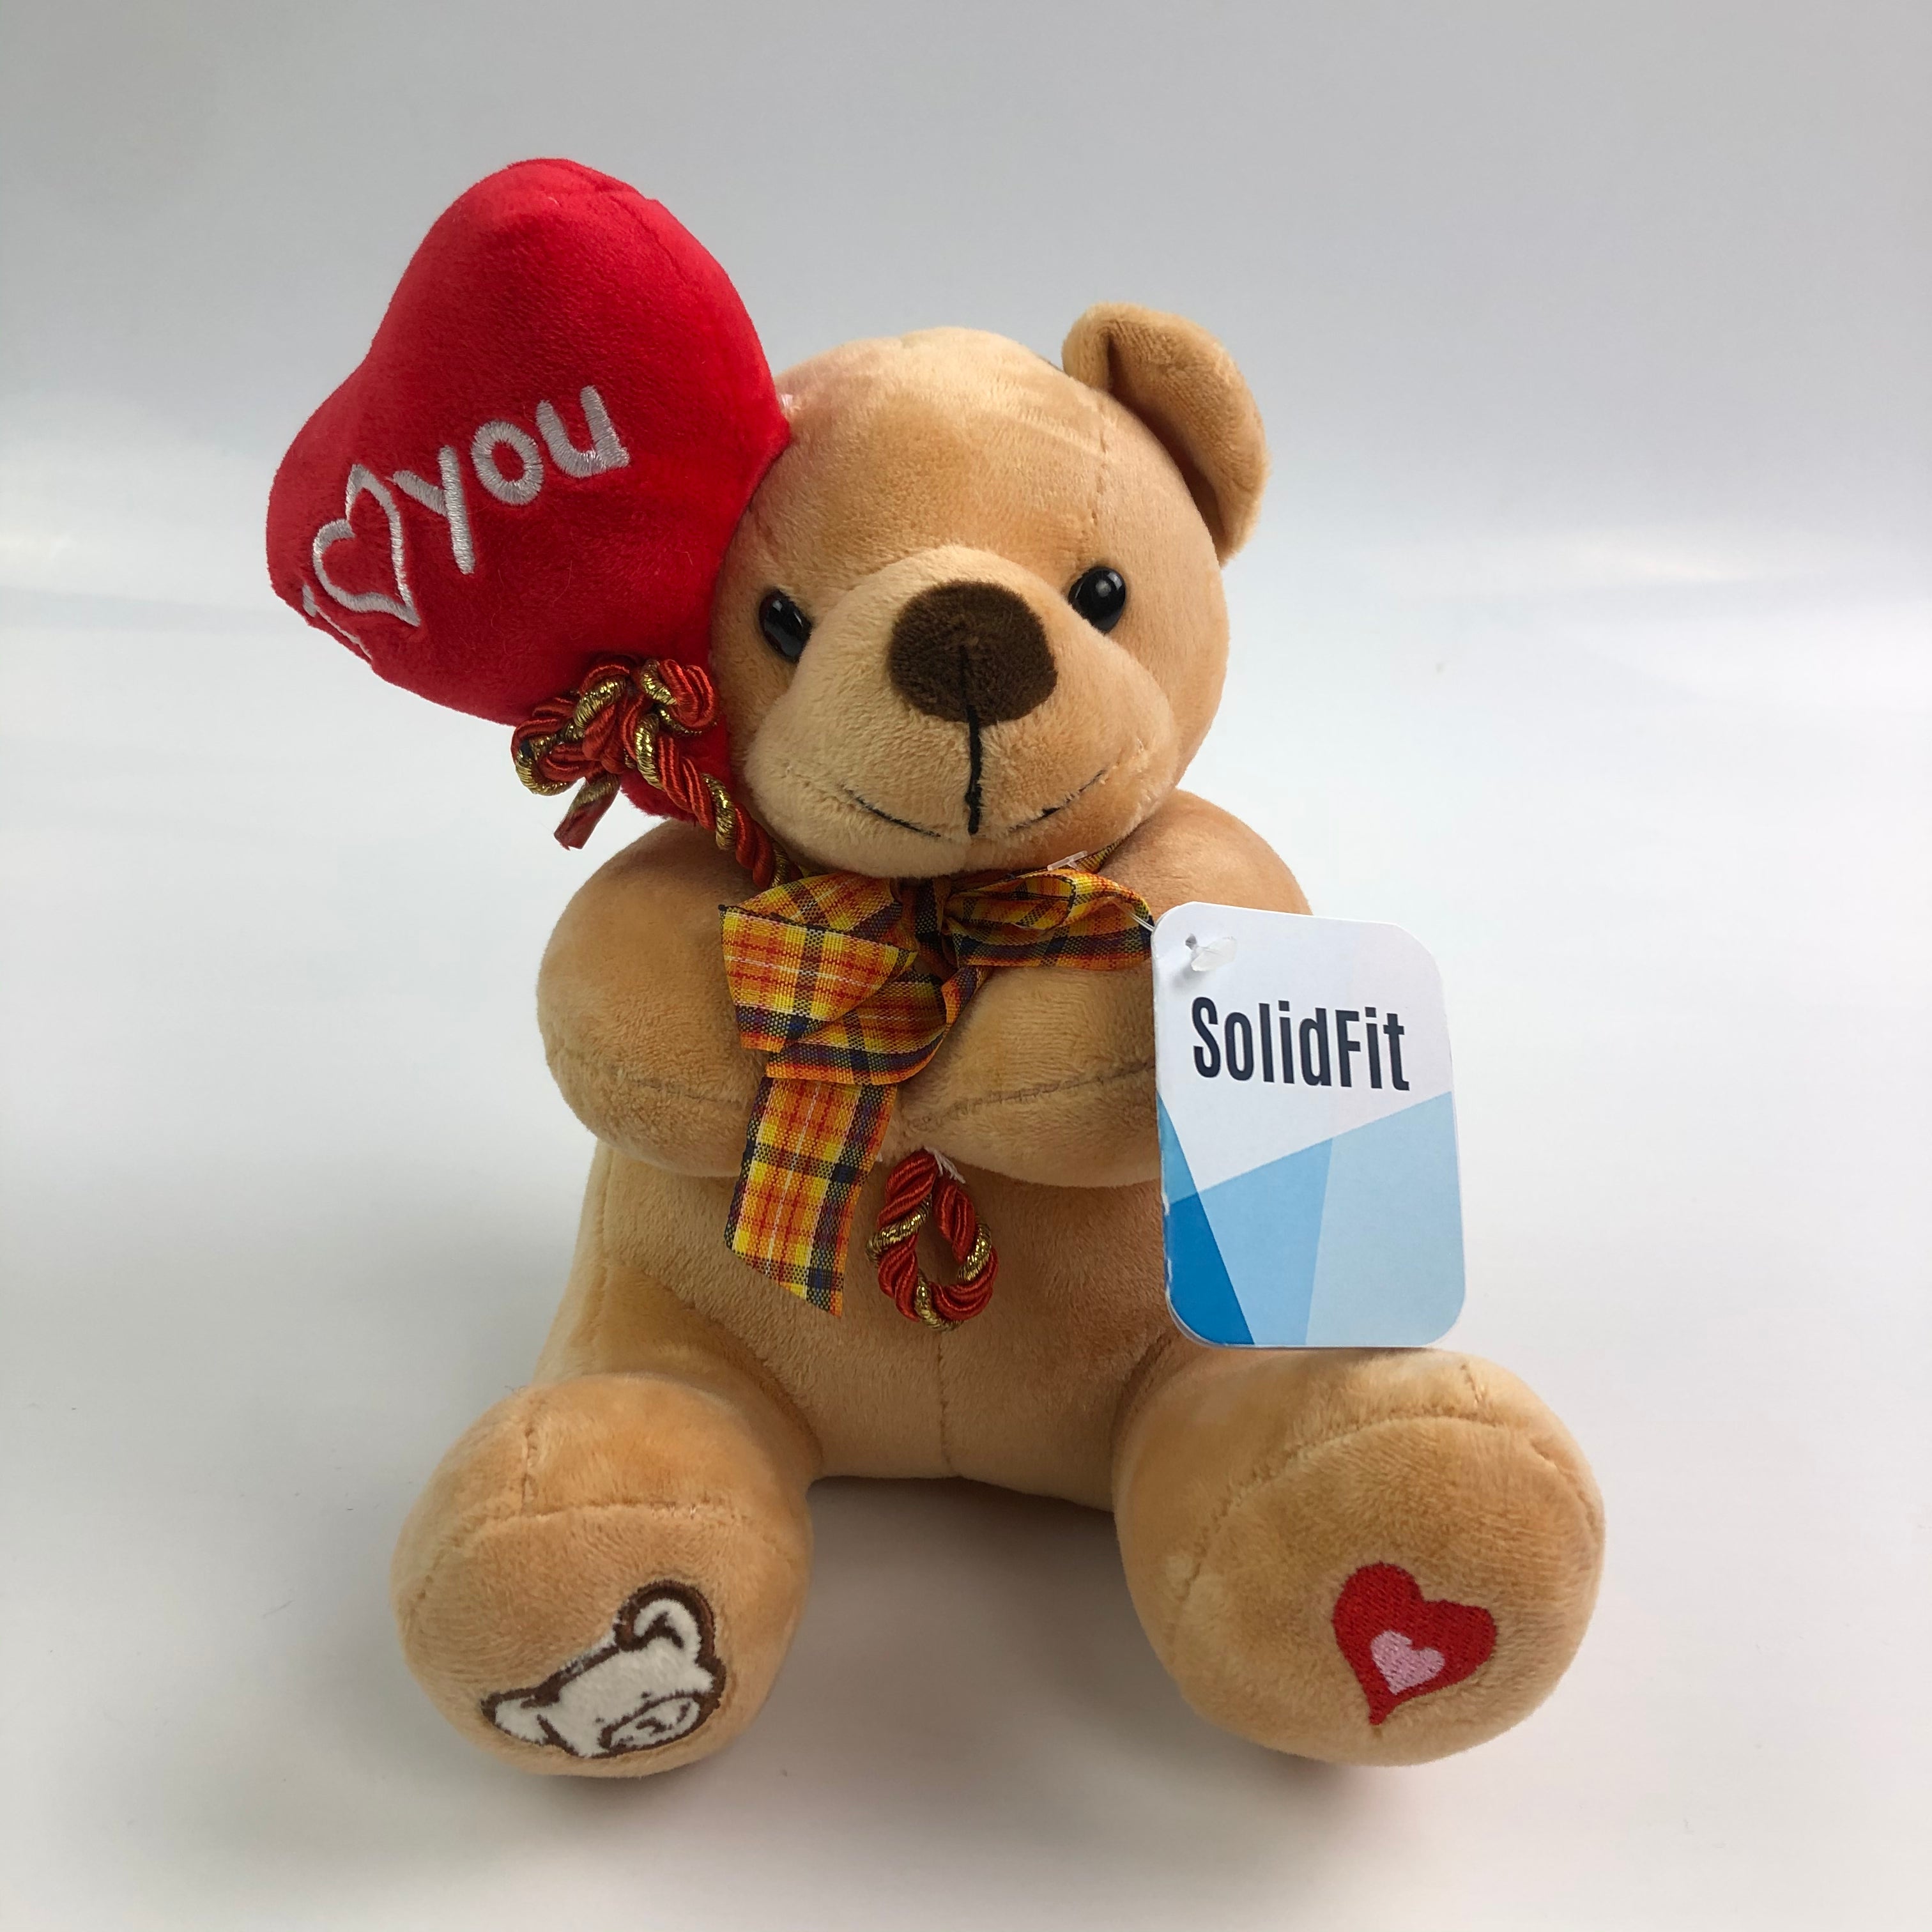 SolidFit Teddy Bear Stuffed Animal - Glow Guards